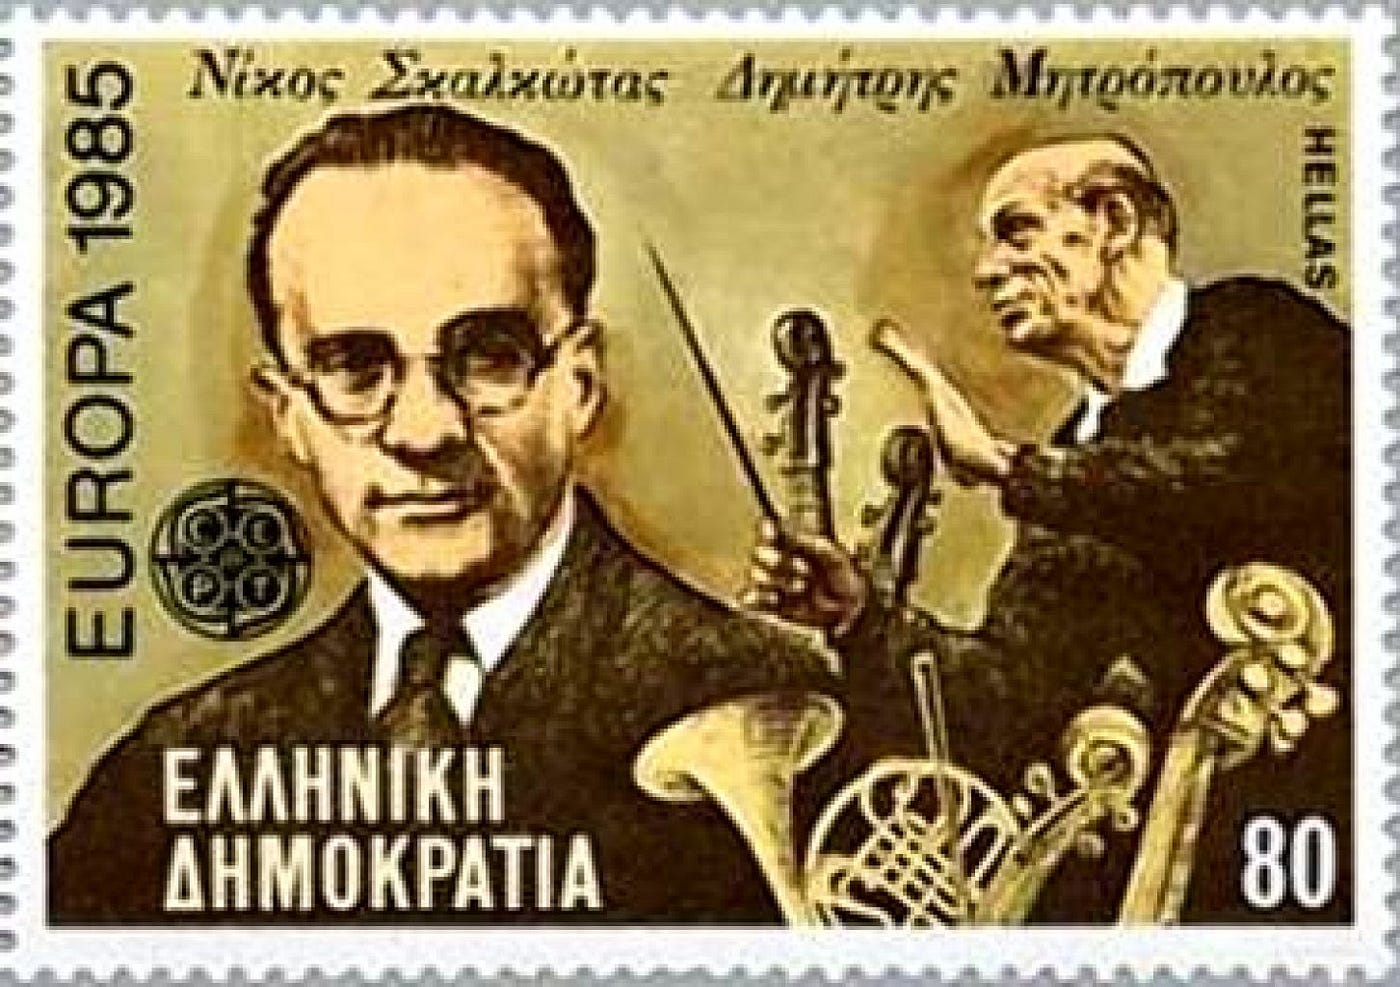 Nikos Skalkottas. Nikos Skalkottas (Greek: Nίκος… | by KOSMAS LAPATAS  pianist | Medium